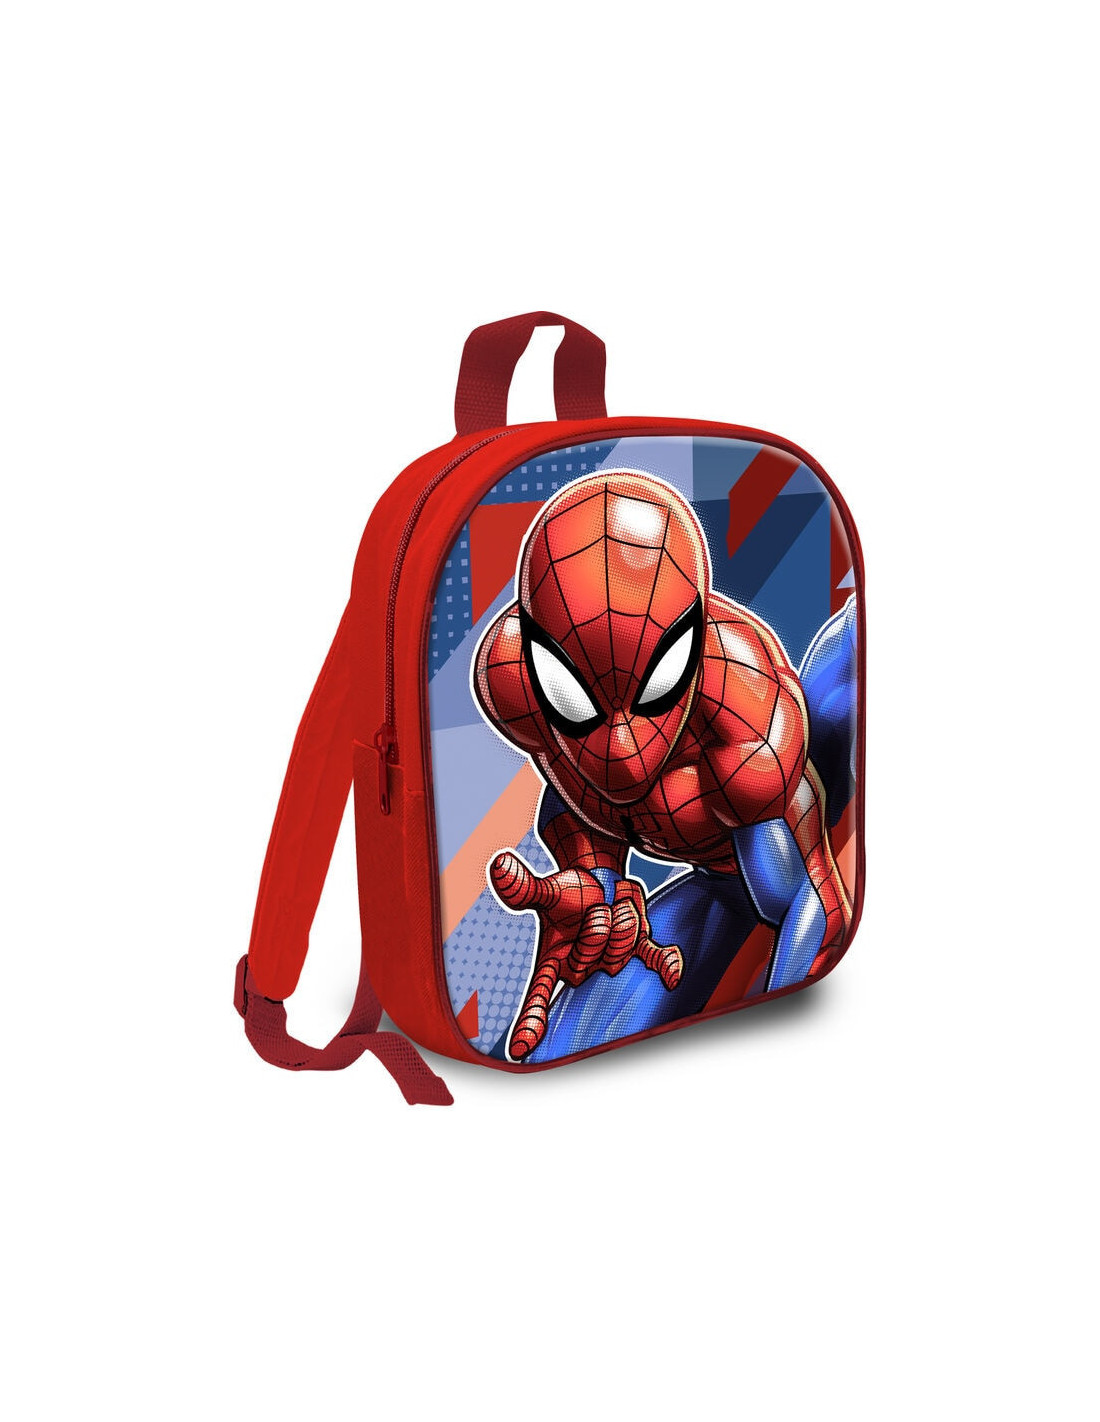 Ghiozdan prescolari Marvel Avengers - Spider-Man, 29 x 24 x 8 cm